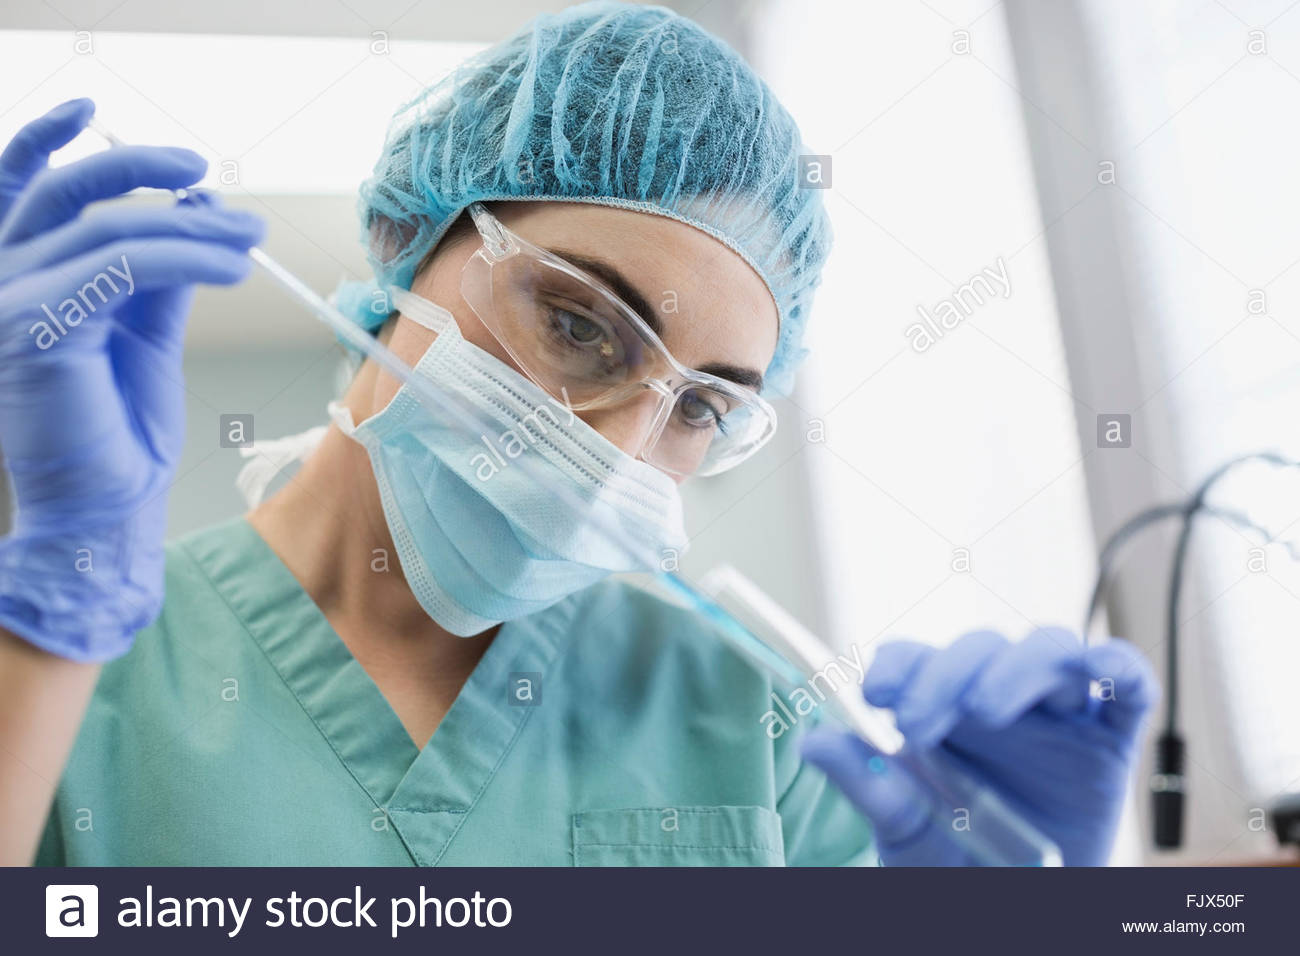 Focused female medical technician using pipette in laboratory Stock Photo